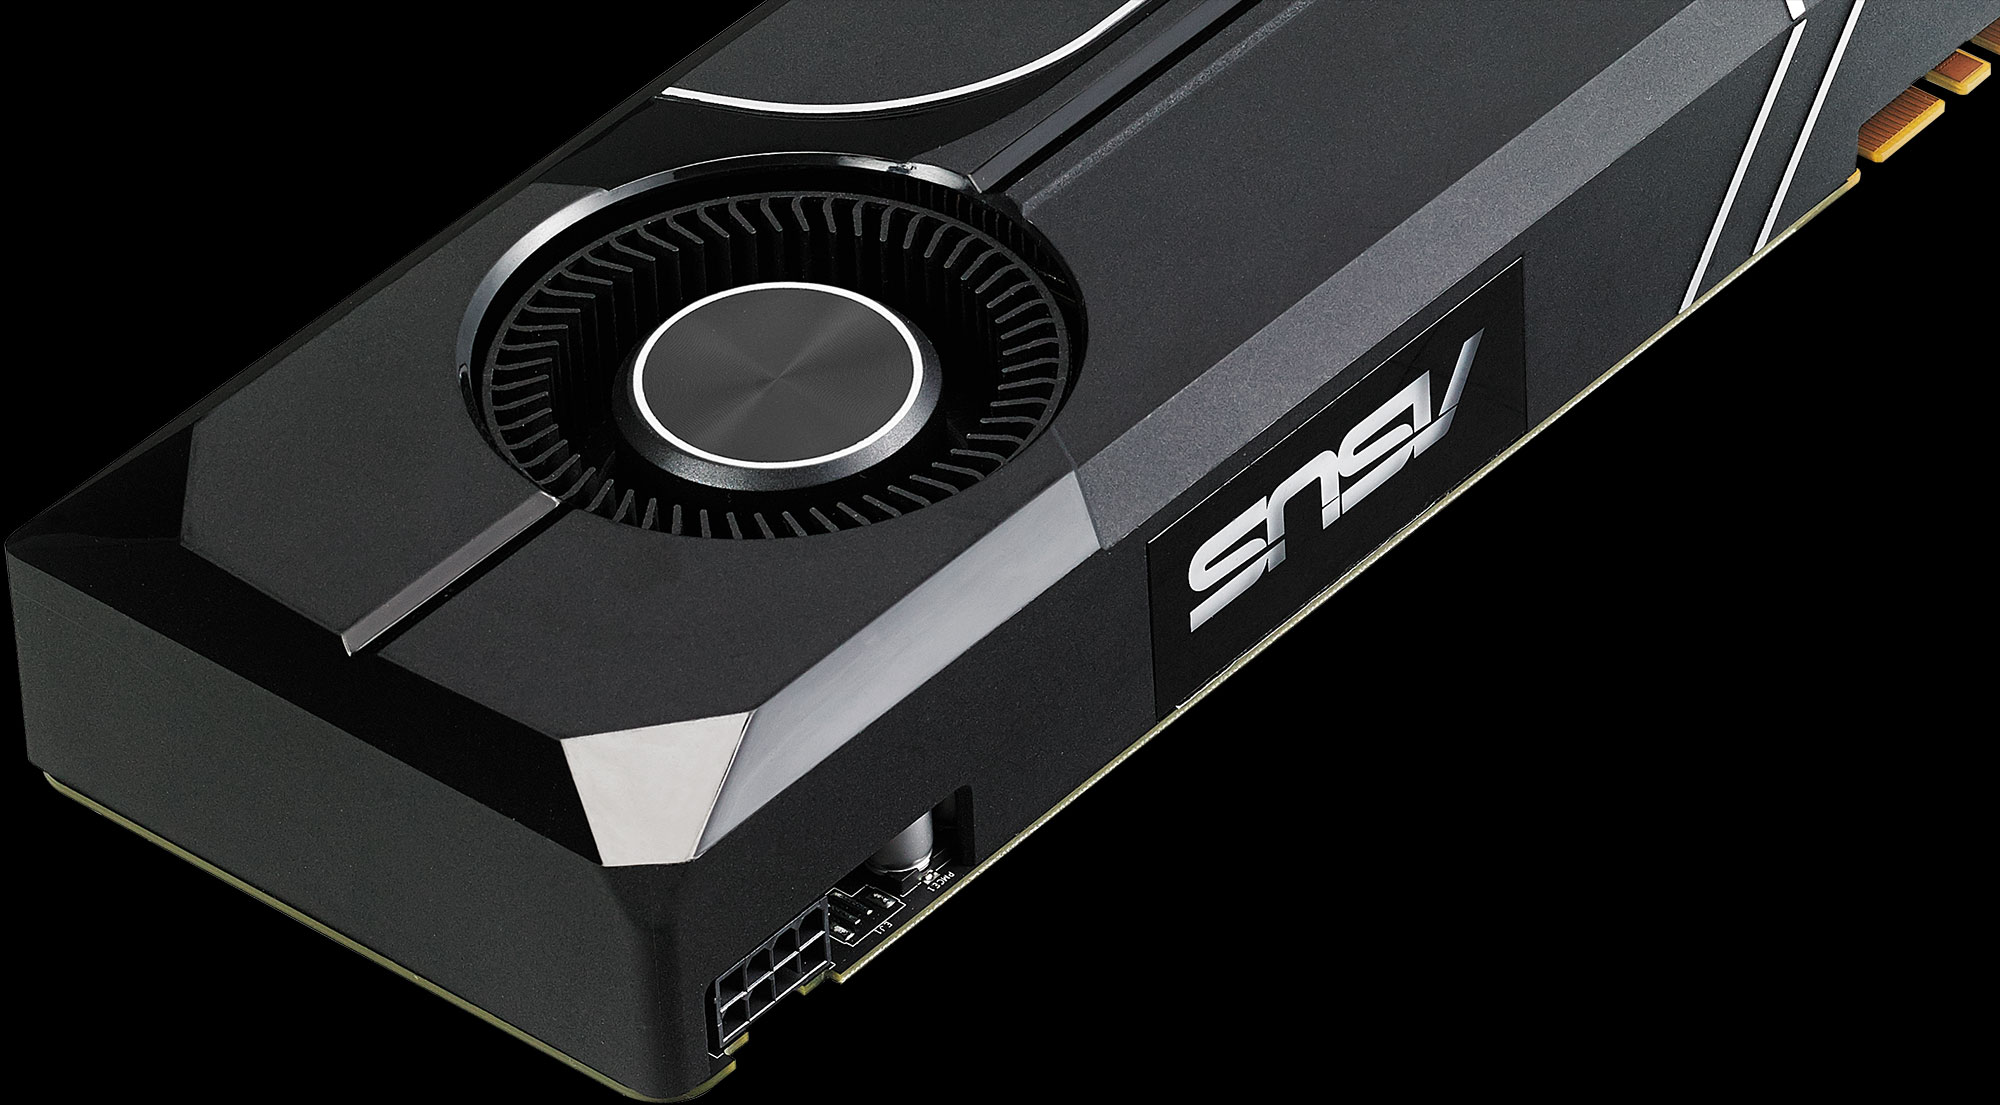 ROG Strix supersizes the GeForce GTX 1070 Ti graphics card